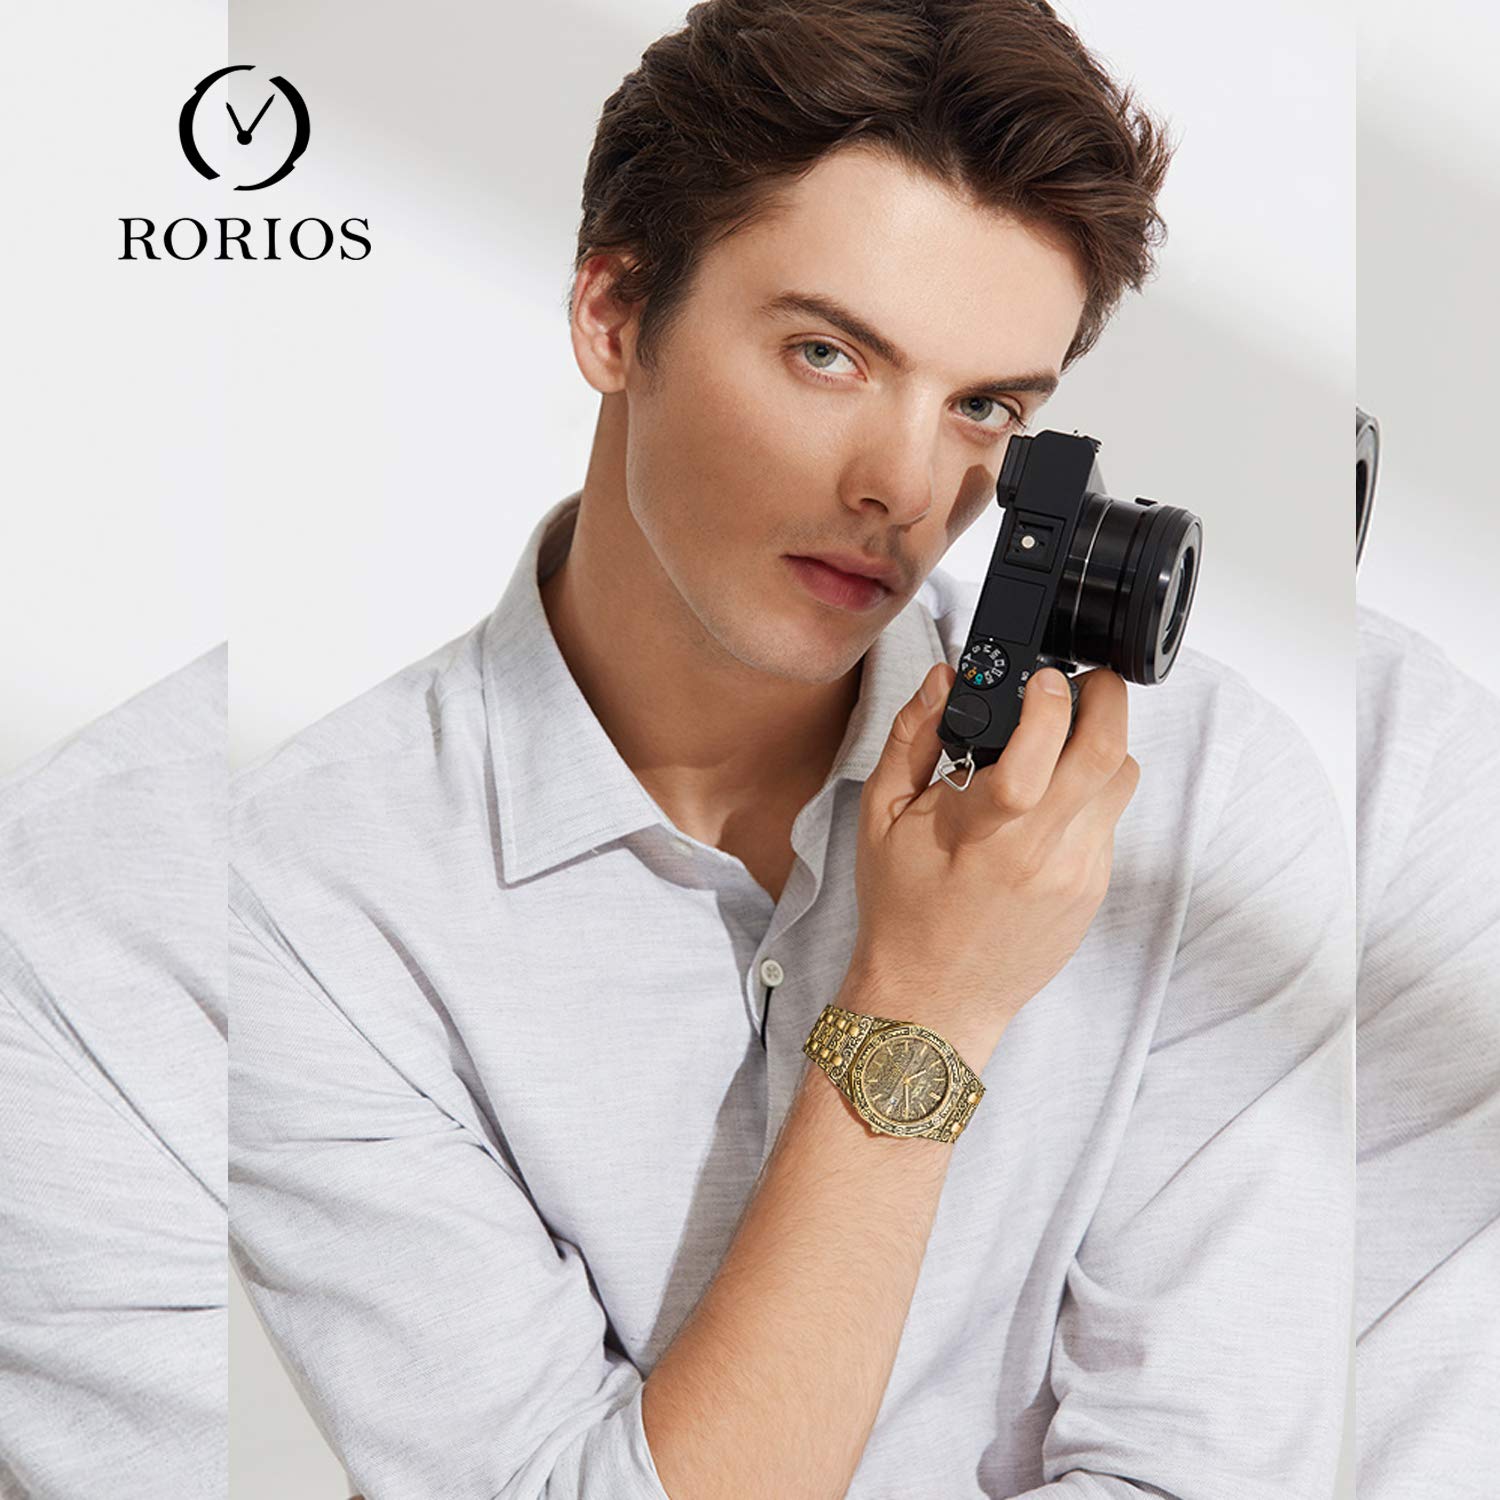 rorios Retro Herren Uhren Mode Analog Quarz Armbanduhren mit Kalender Edelstahlband Graviert Männer Armbanduhr